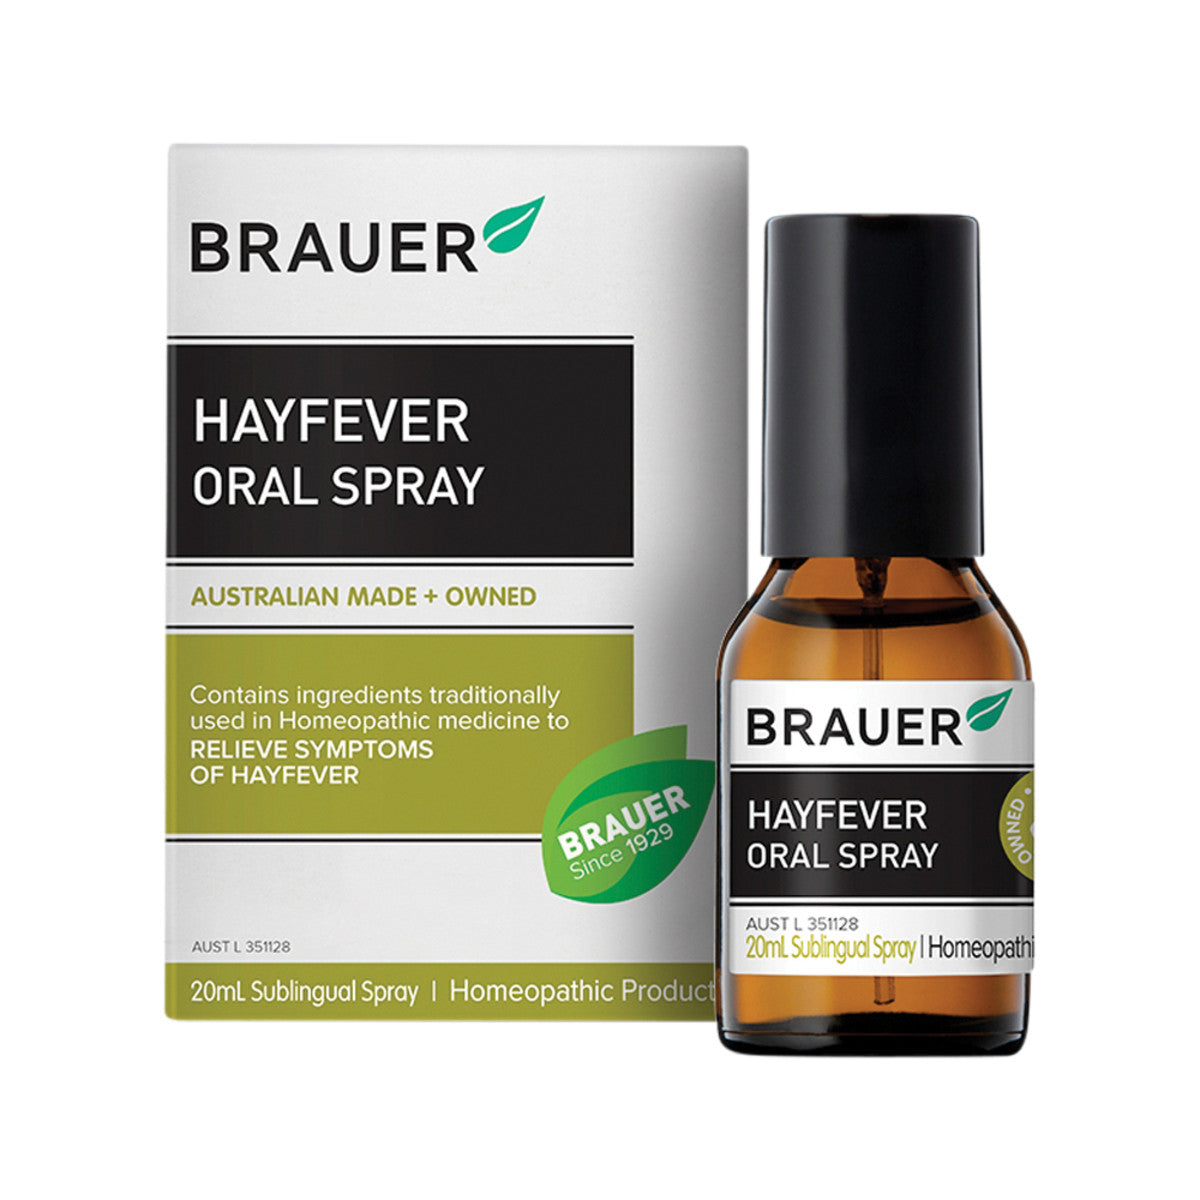 Brauer - Hayfever Oral Spray